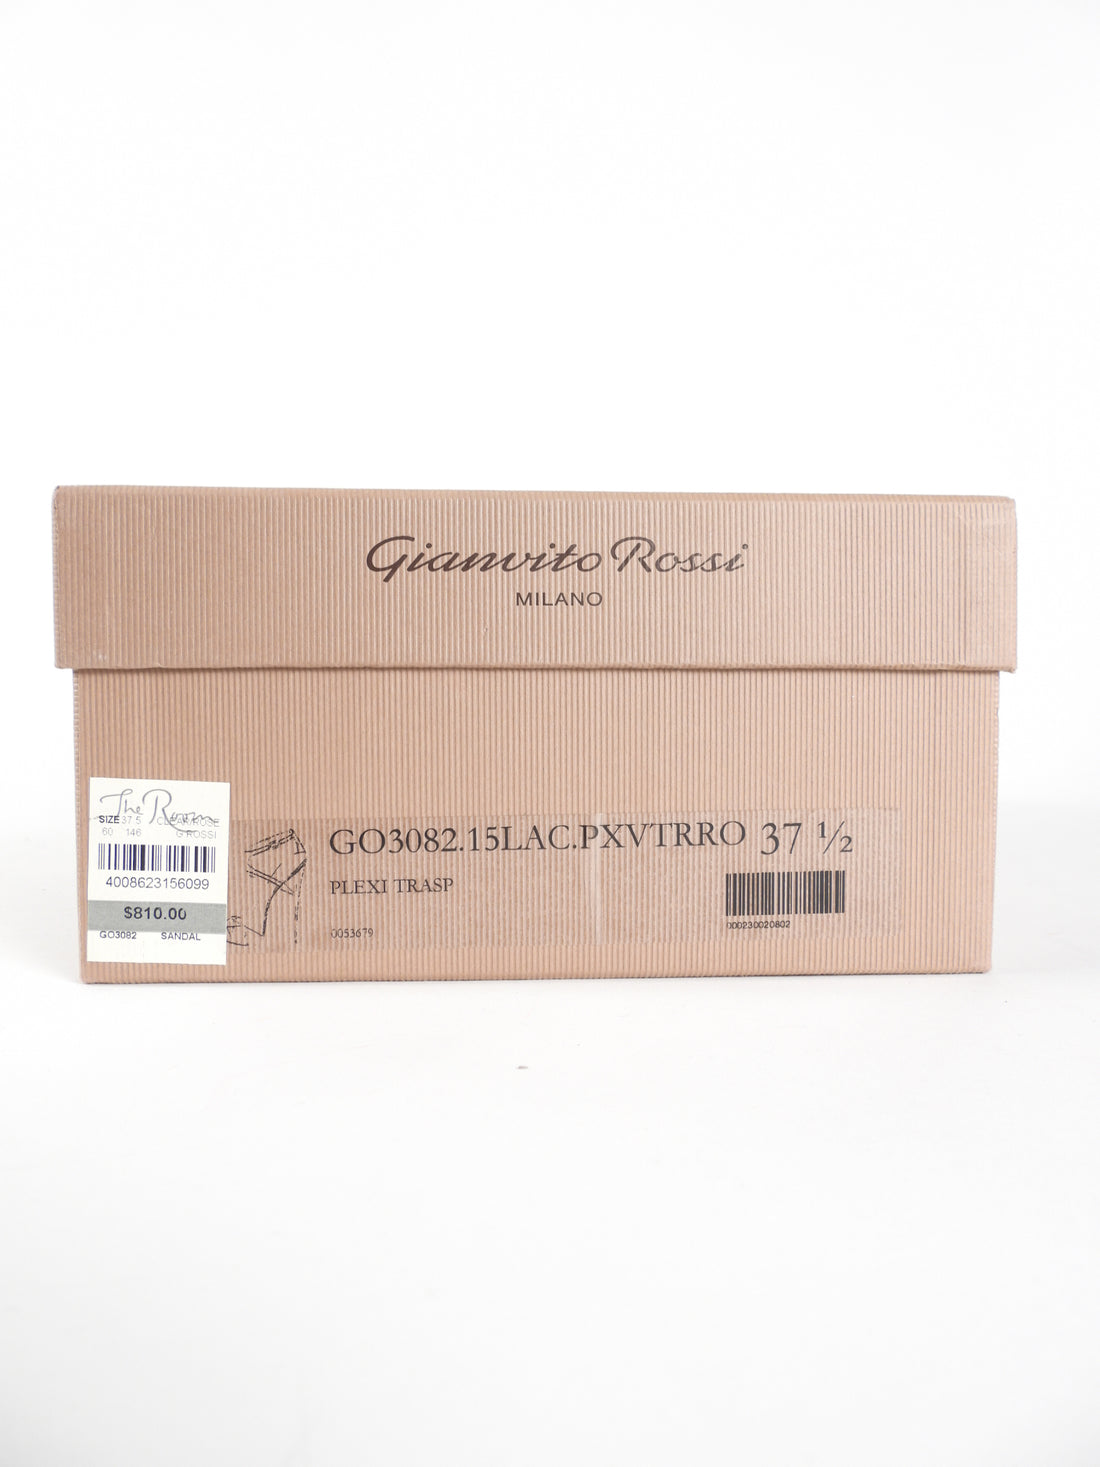 Gianvito Rossi Red Patent Leather Stiletto Heel Sandals - 7